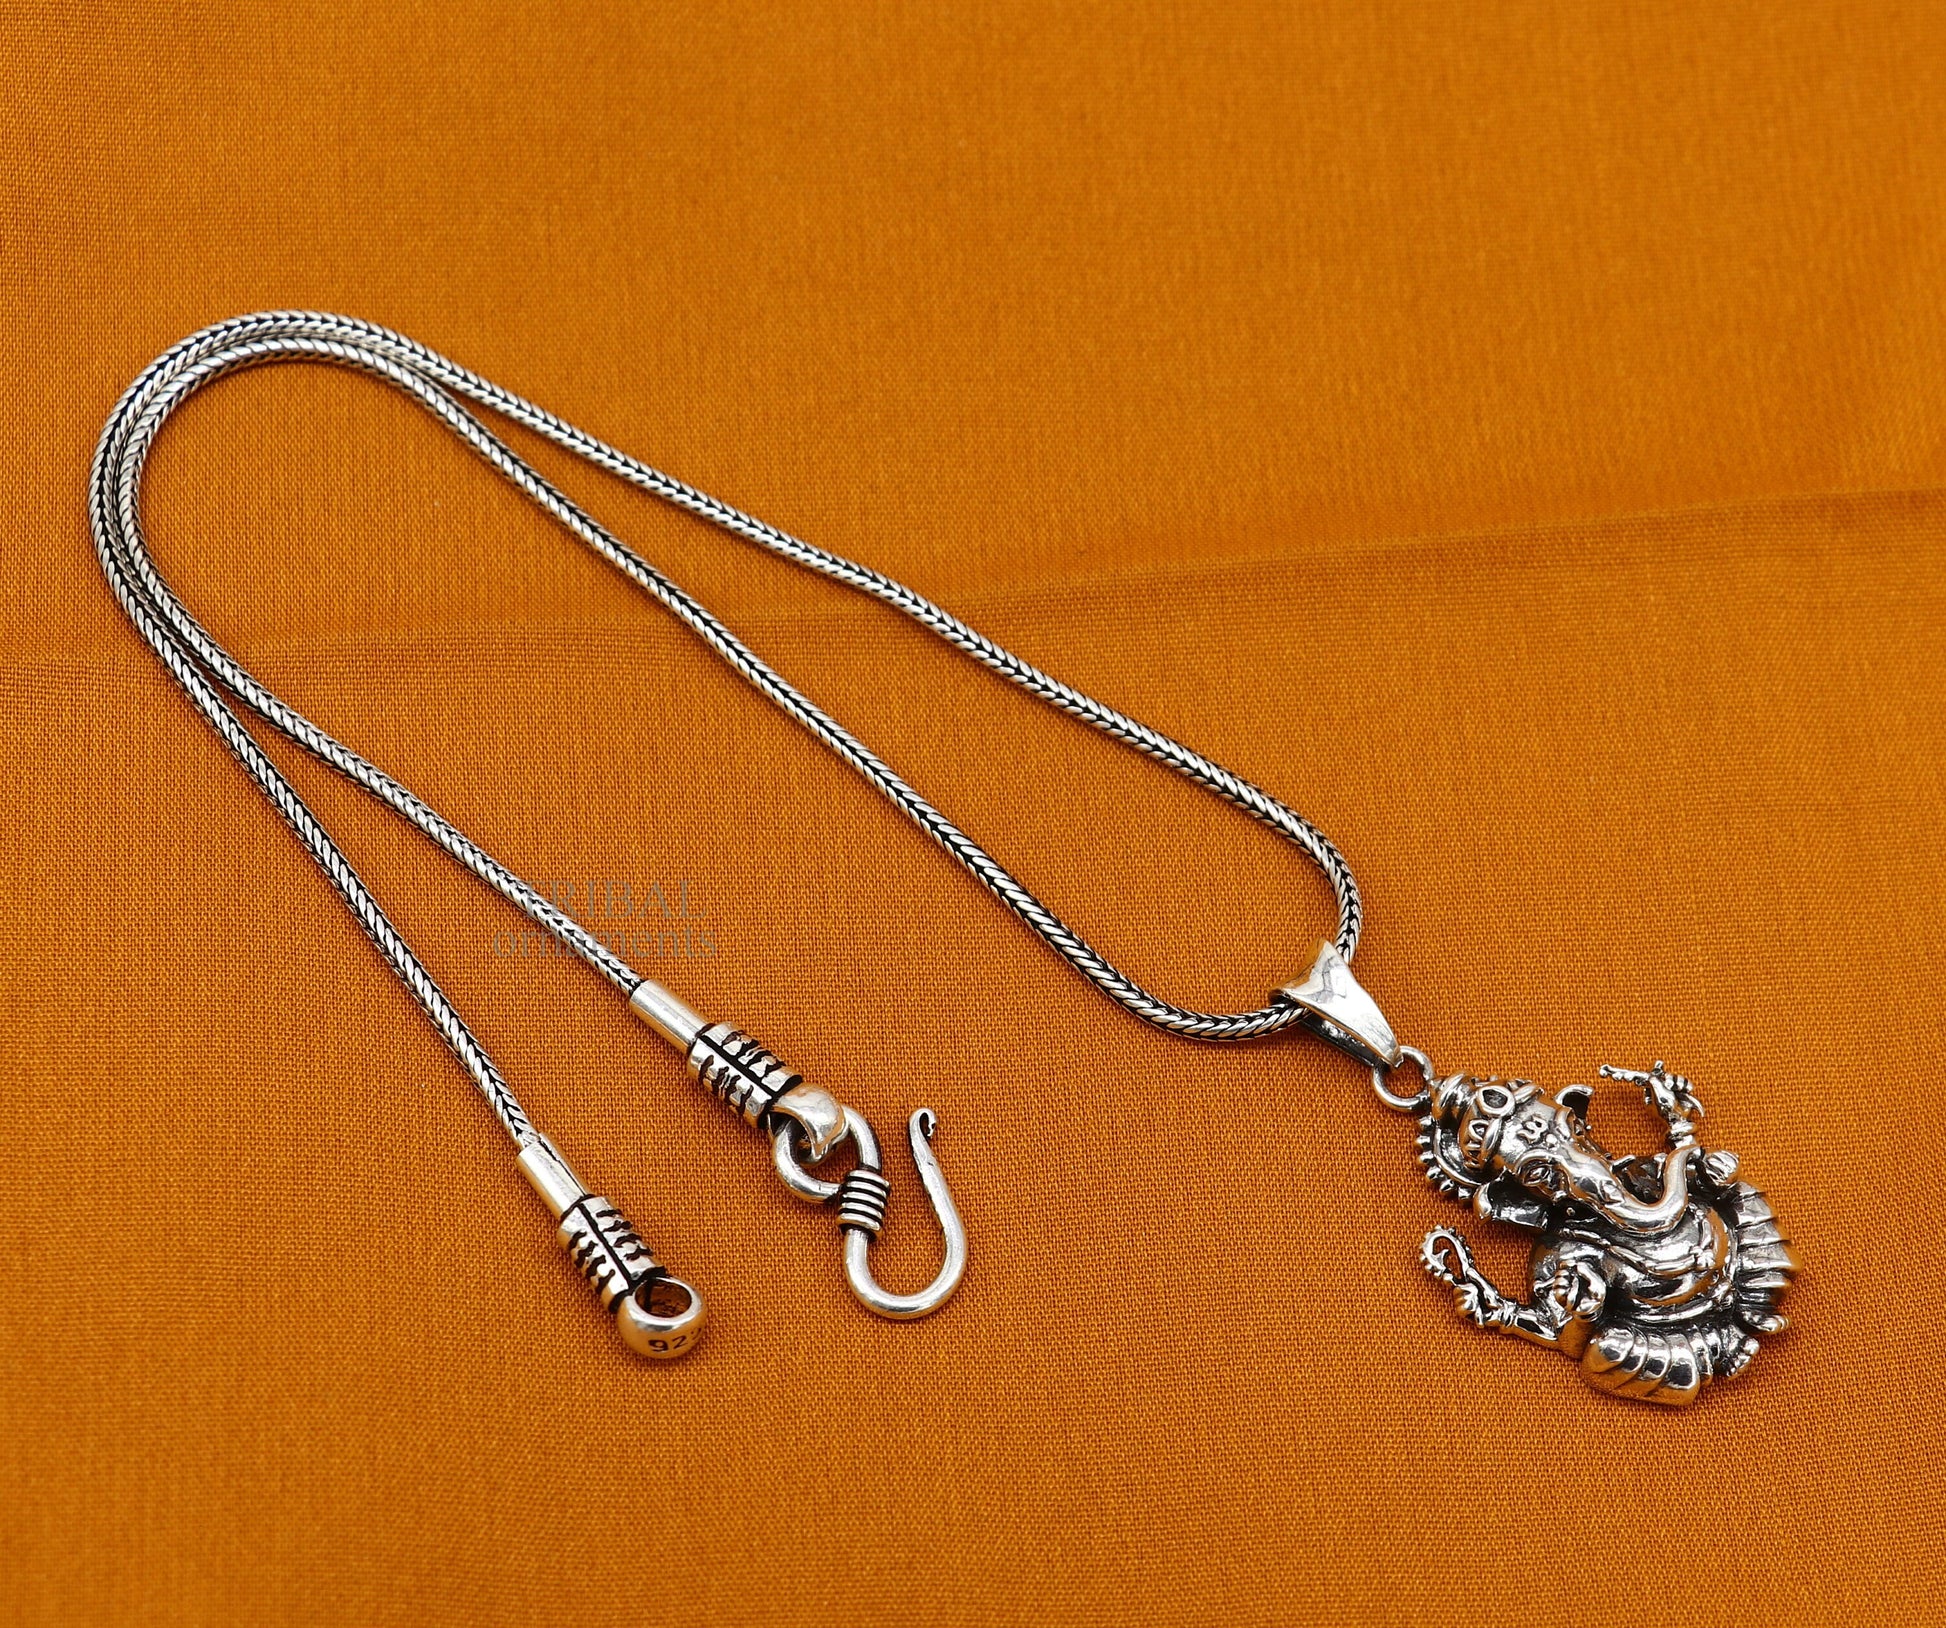 Vintage trendy 925 sterling silver handmade Lord Ganesha pendant, amazing stylish unisex pendant personalized jewelry ssp1416 - TRIBAL ORNAMENTS